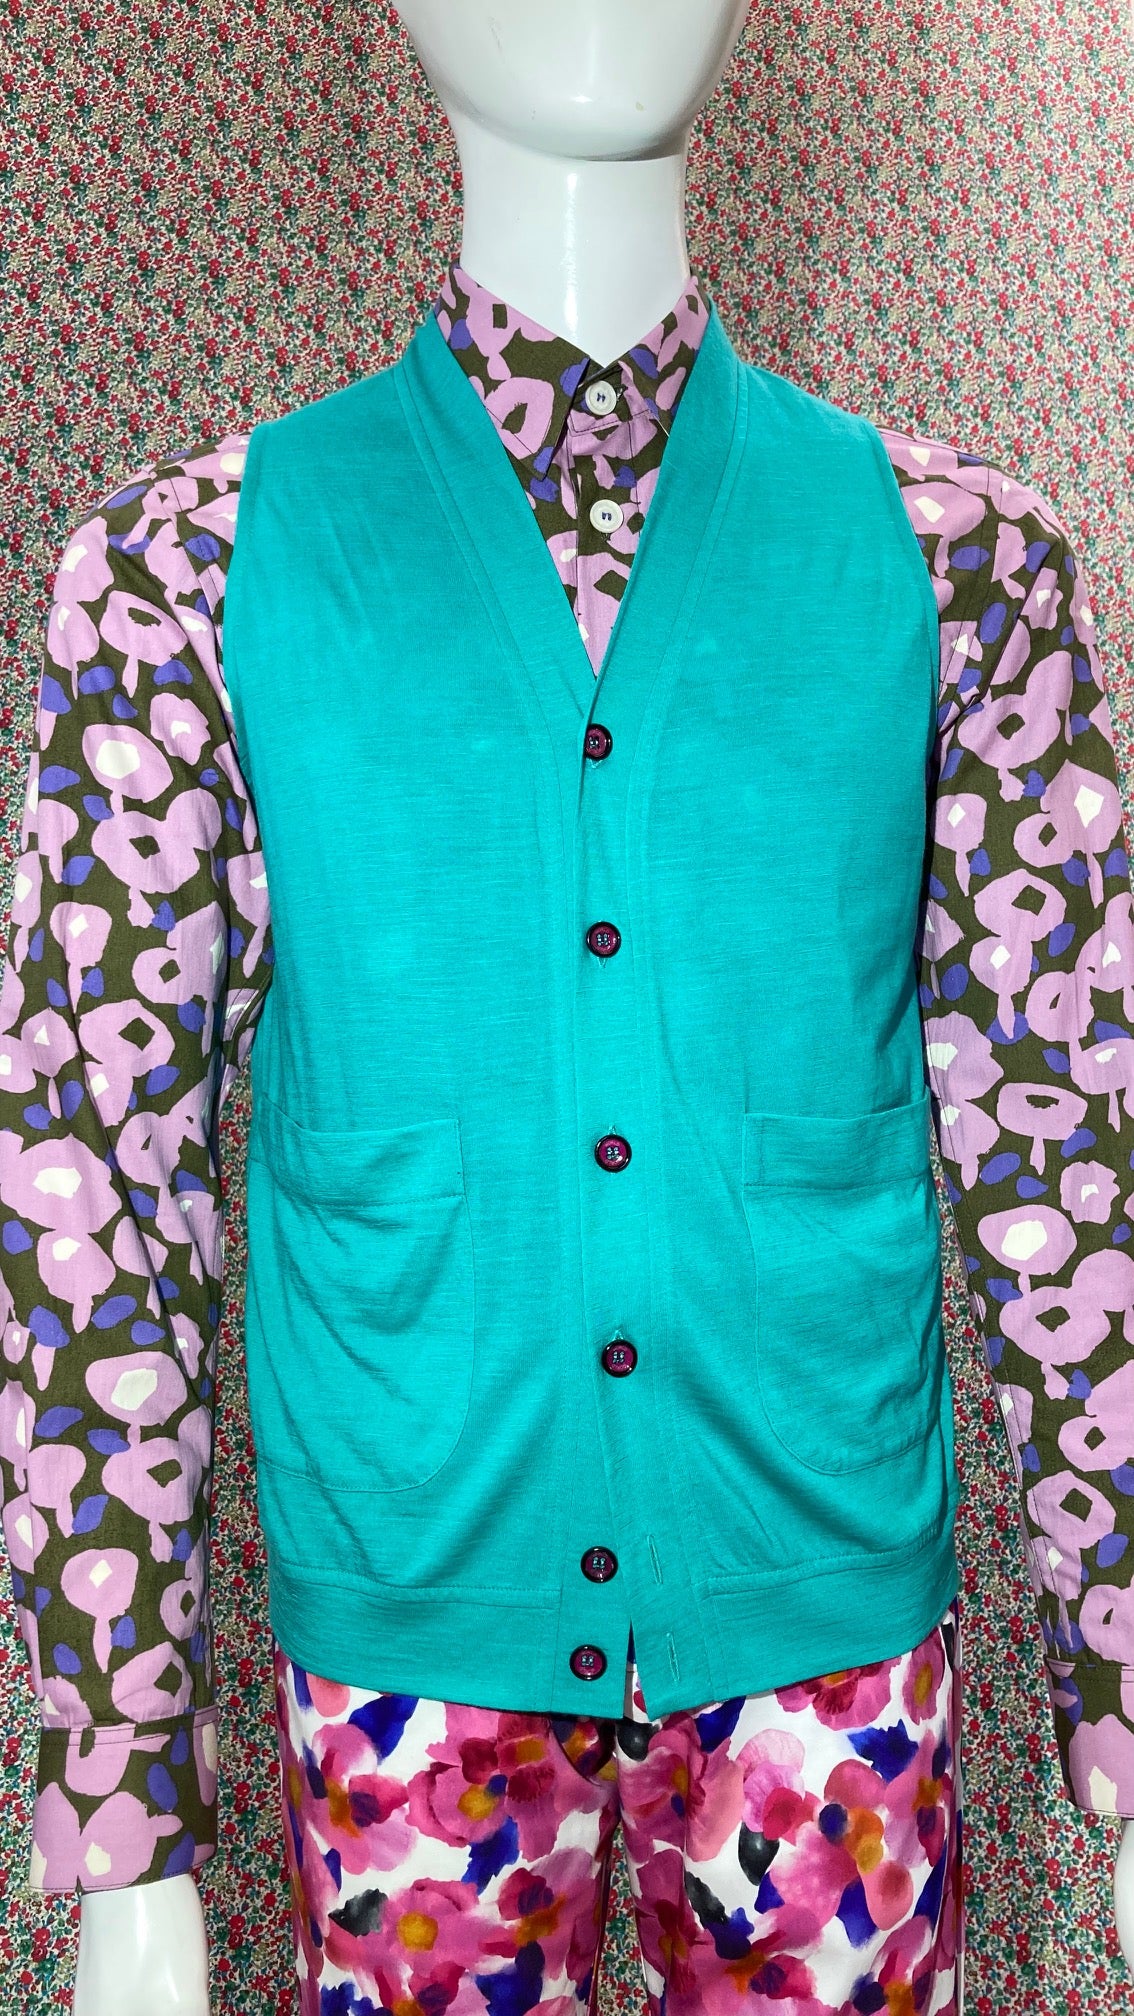 WORLDman 4910 Ghost Vest Cardi Seafoam Green